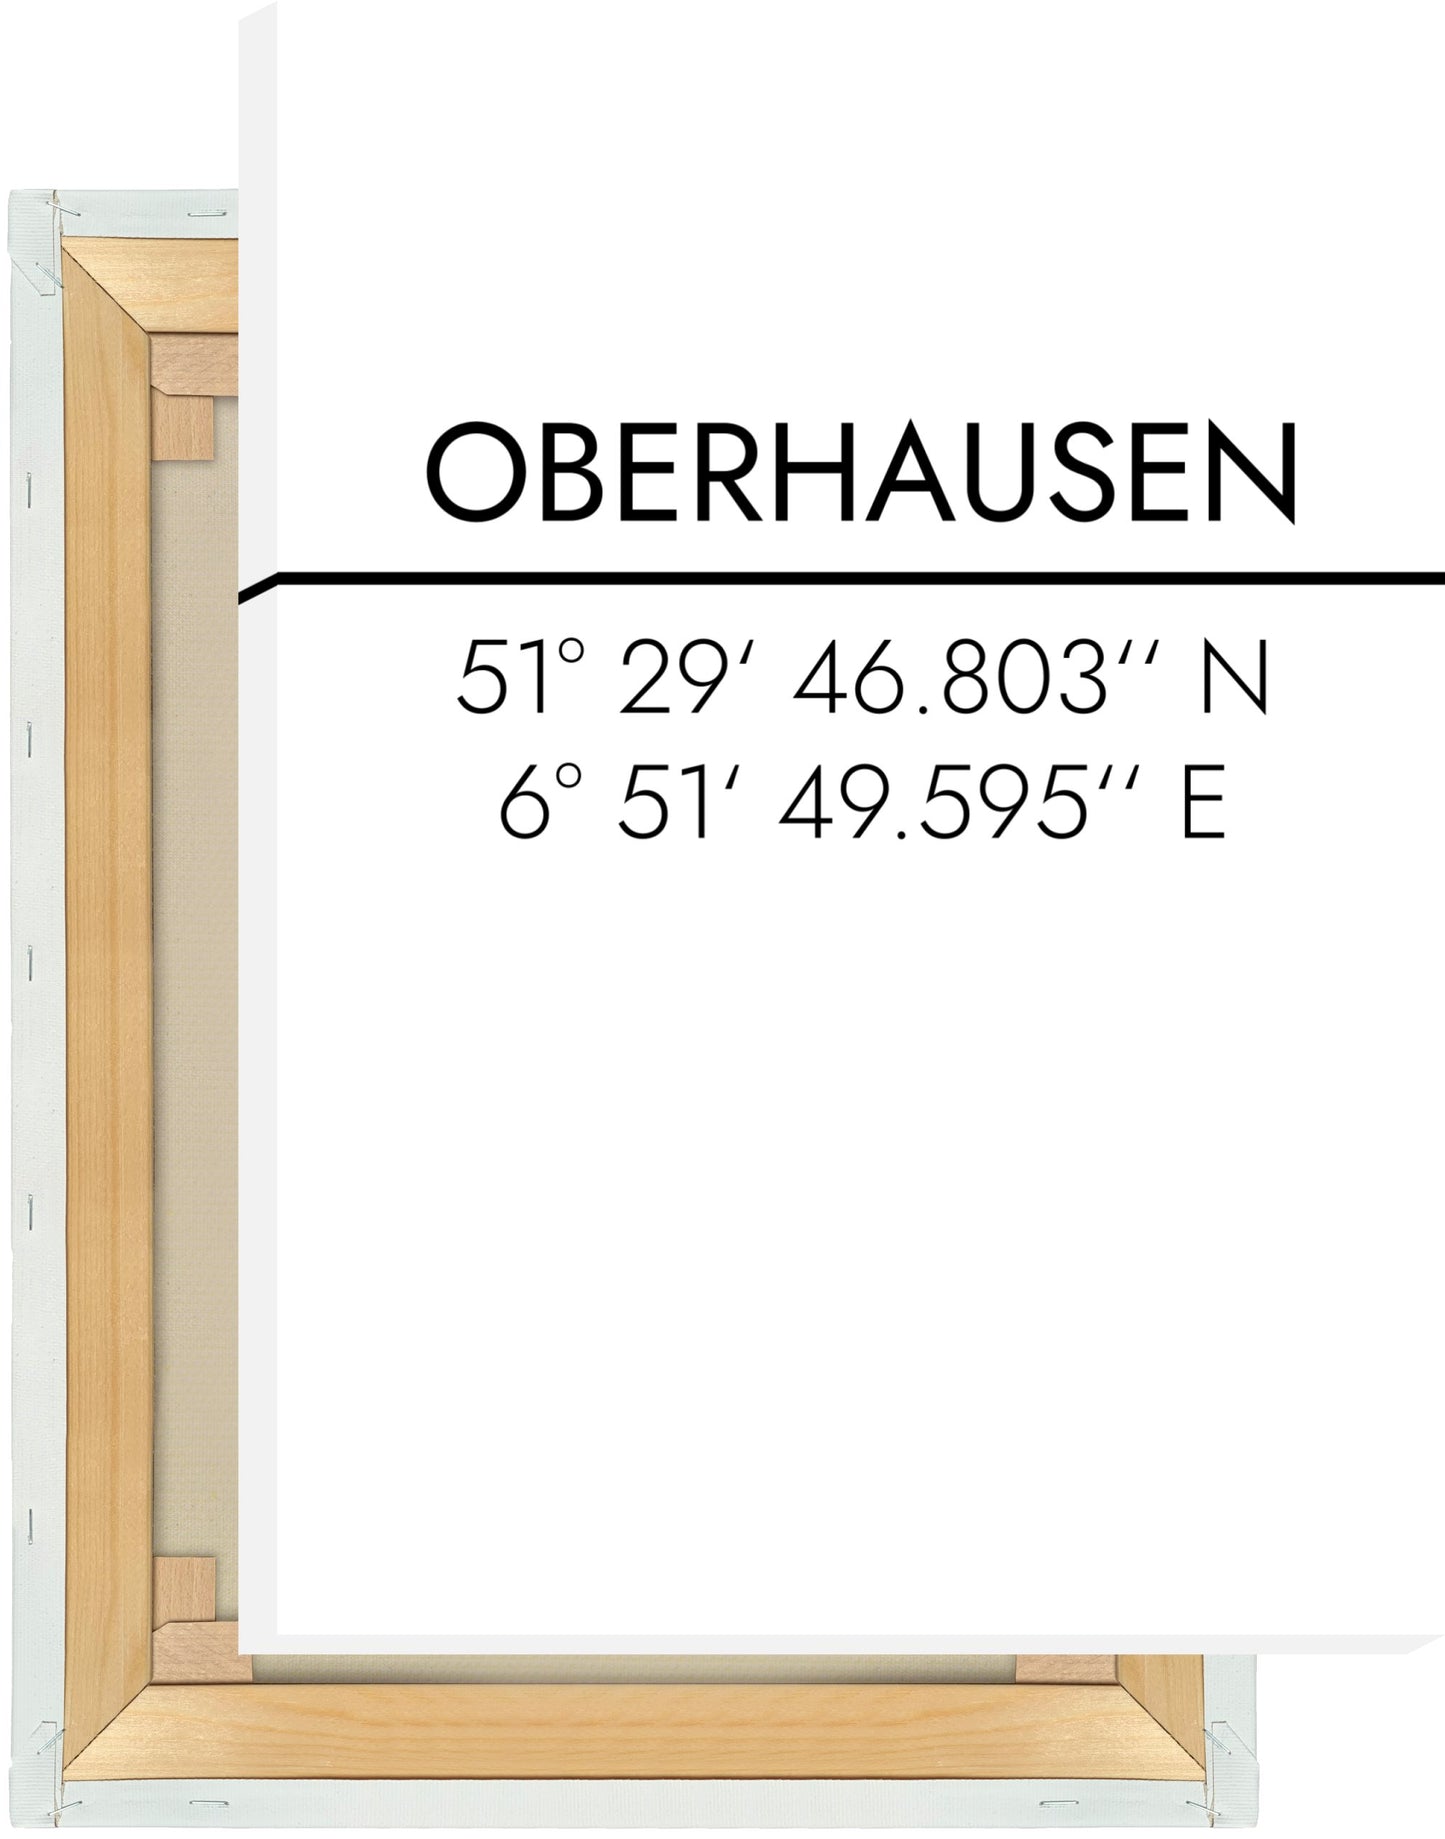 Leinwand Oberhausen Koordinaten #2